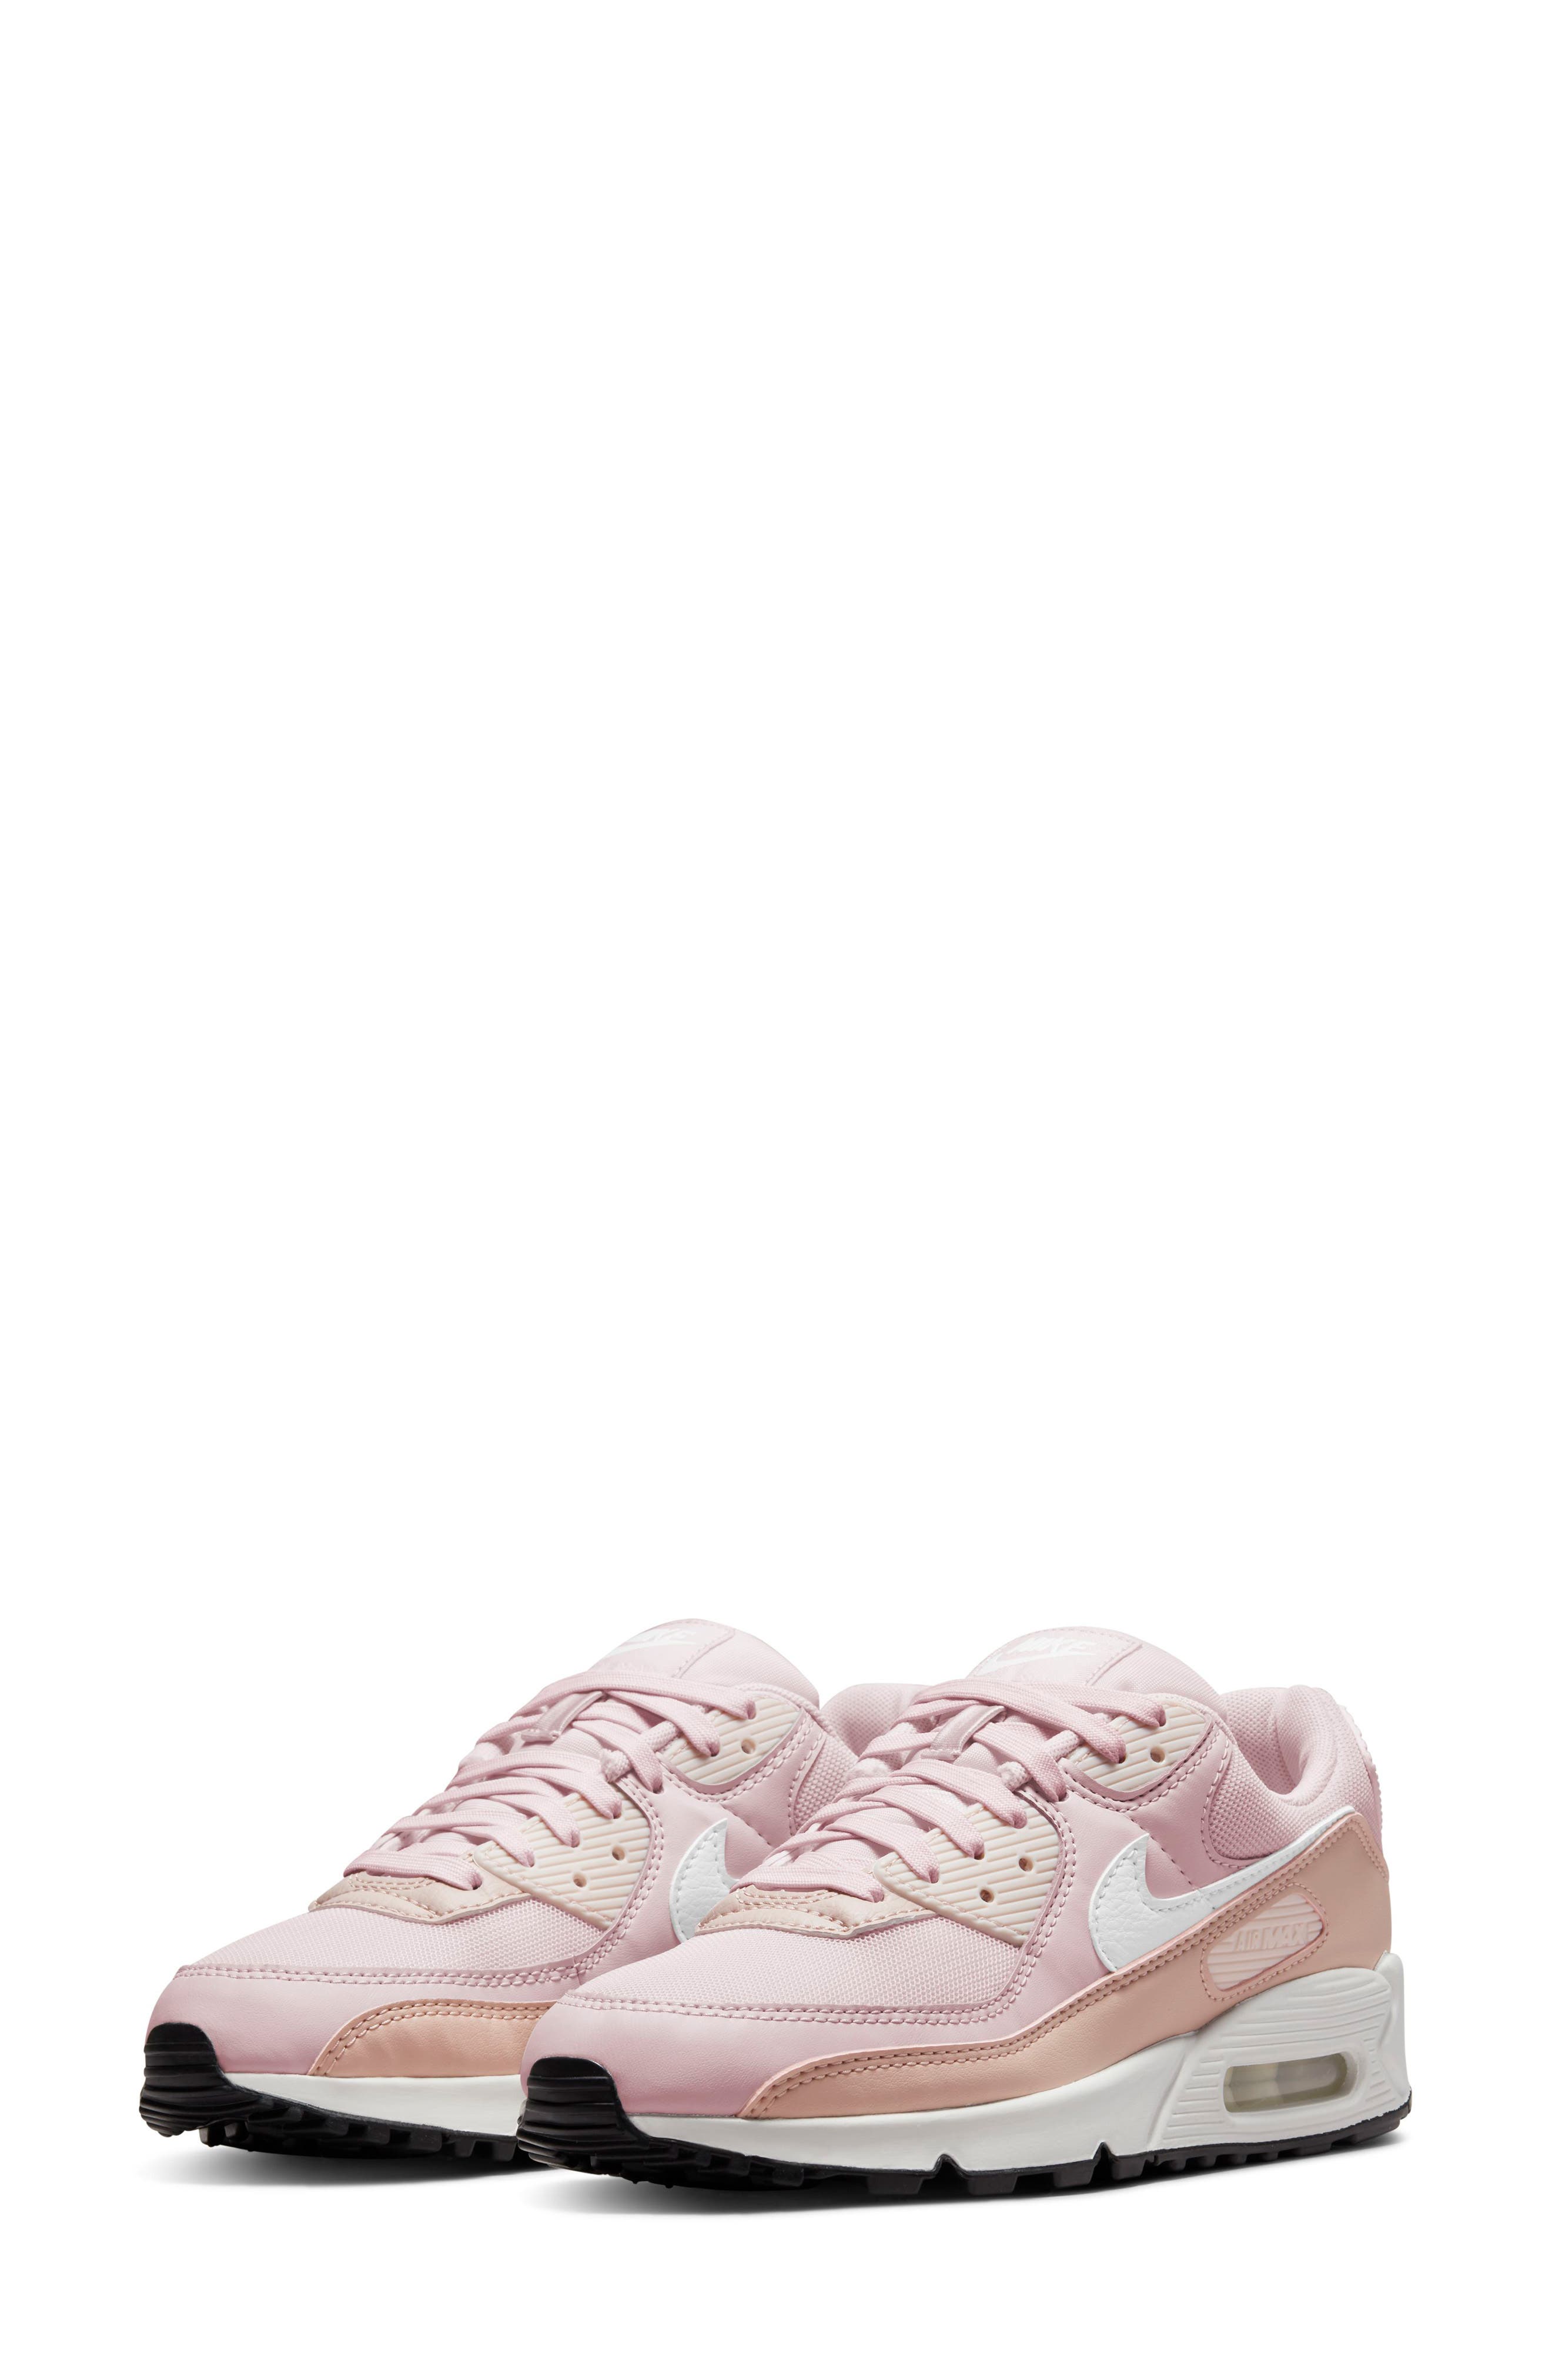 pink nike air max running shoes